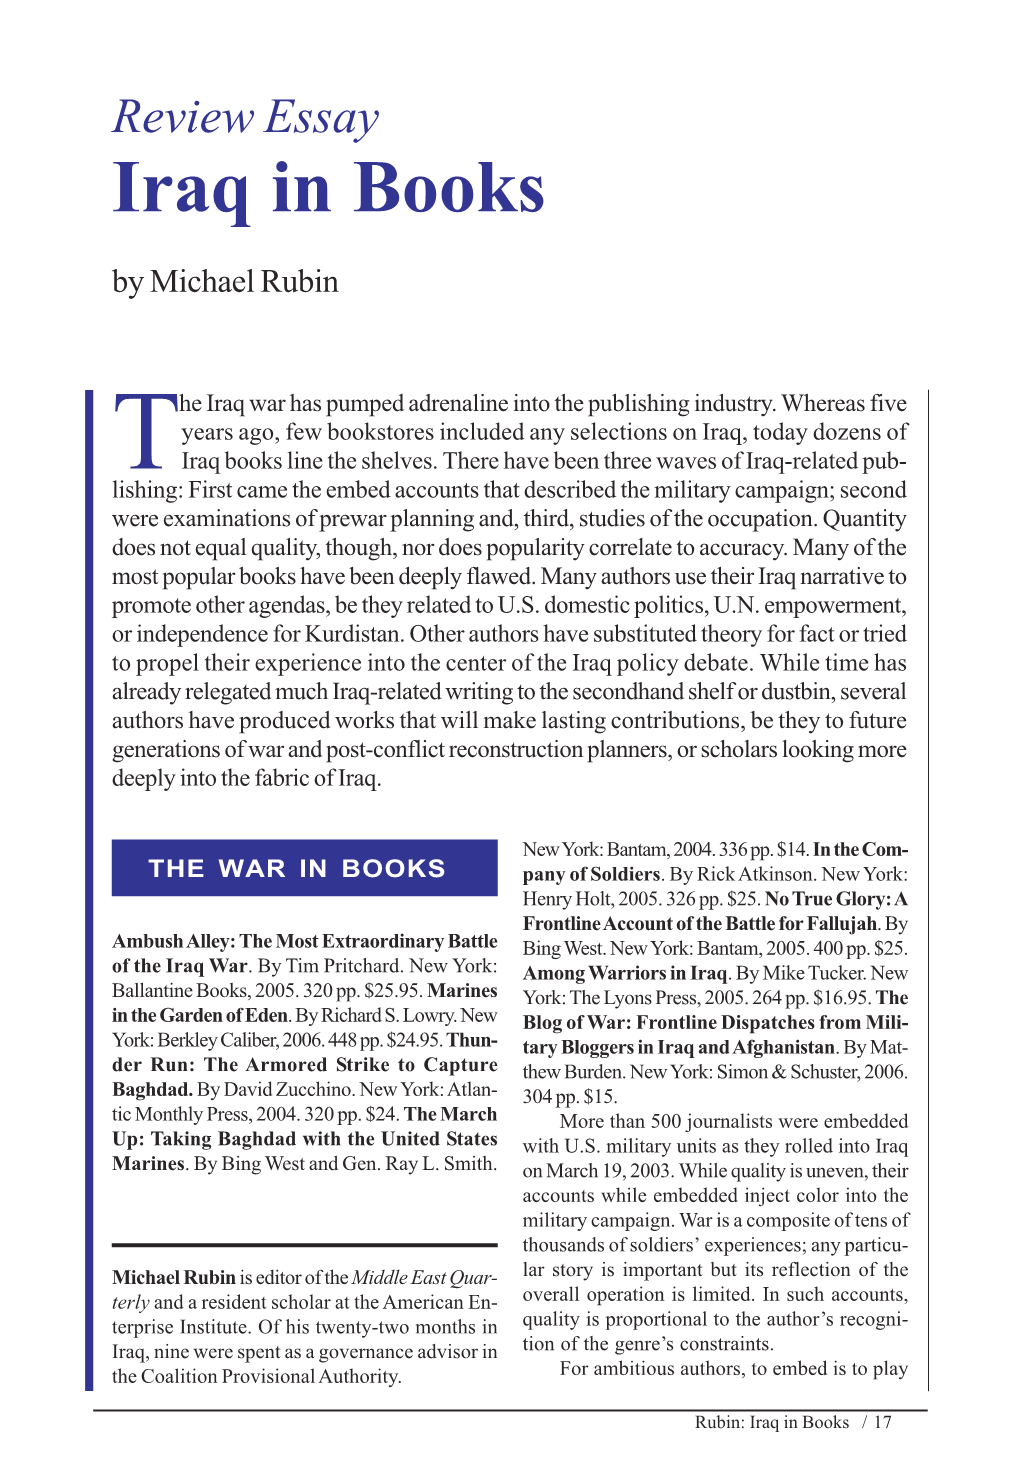 Iraq in Books by Michael Rubin